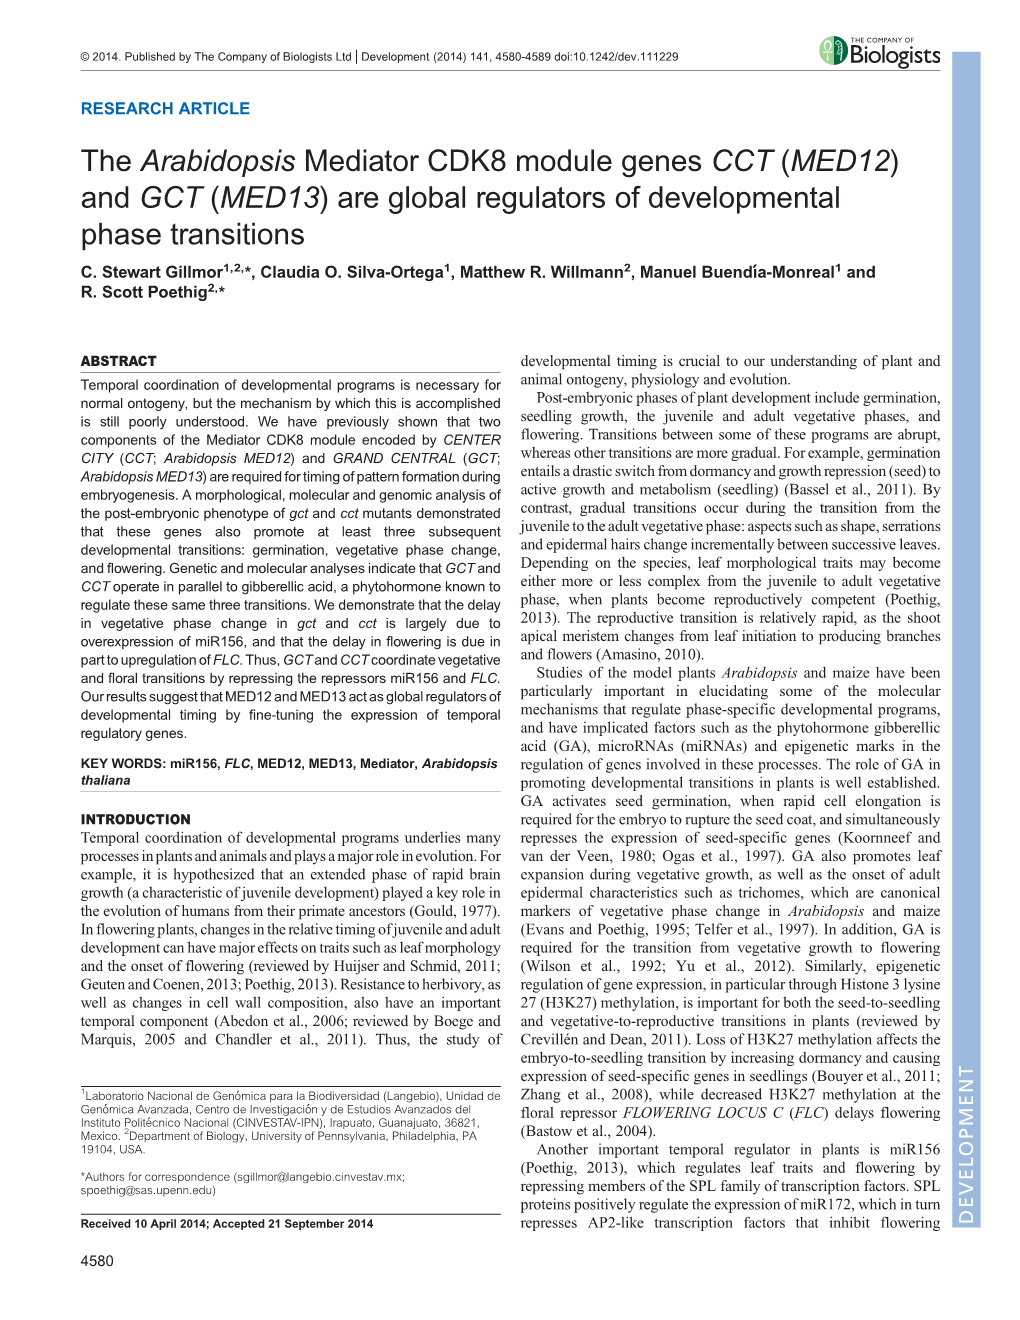 The Arabidopsis Mediator CDK8 Module Genes CCT (MED12) and GCT (MED13) Are Global Regulators of Developmental Phase Transitions C